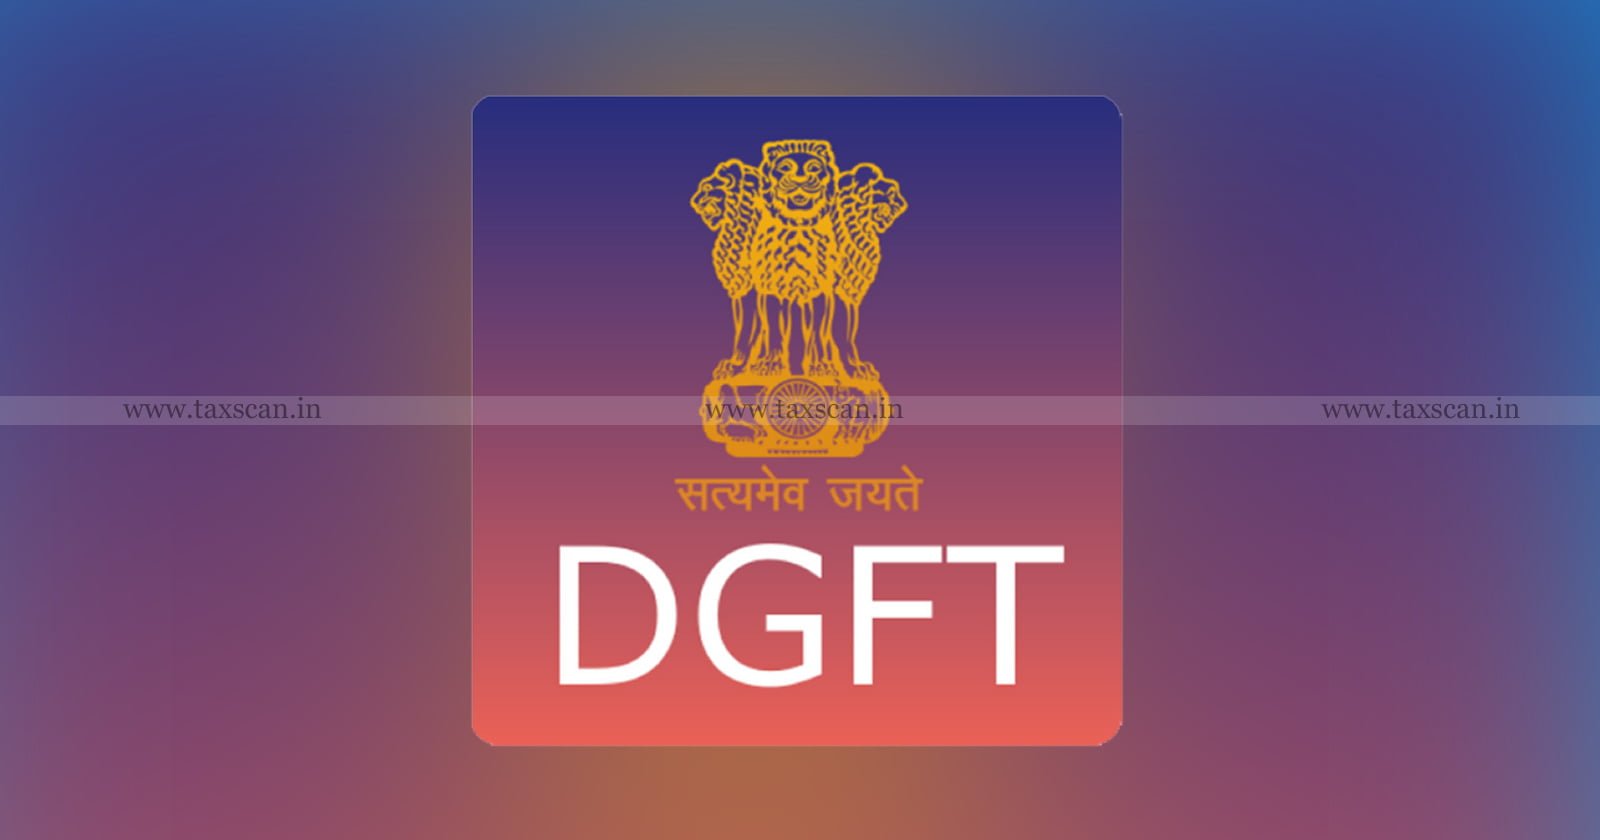 Importer - Registration - Consignment - DGFT - taxscan